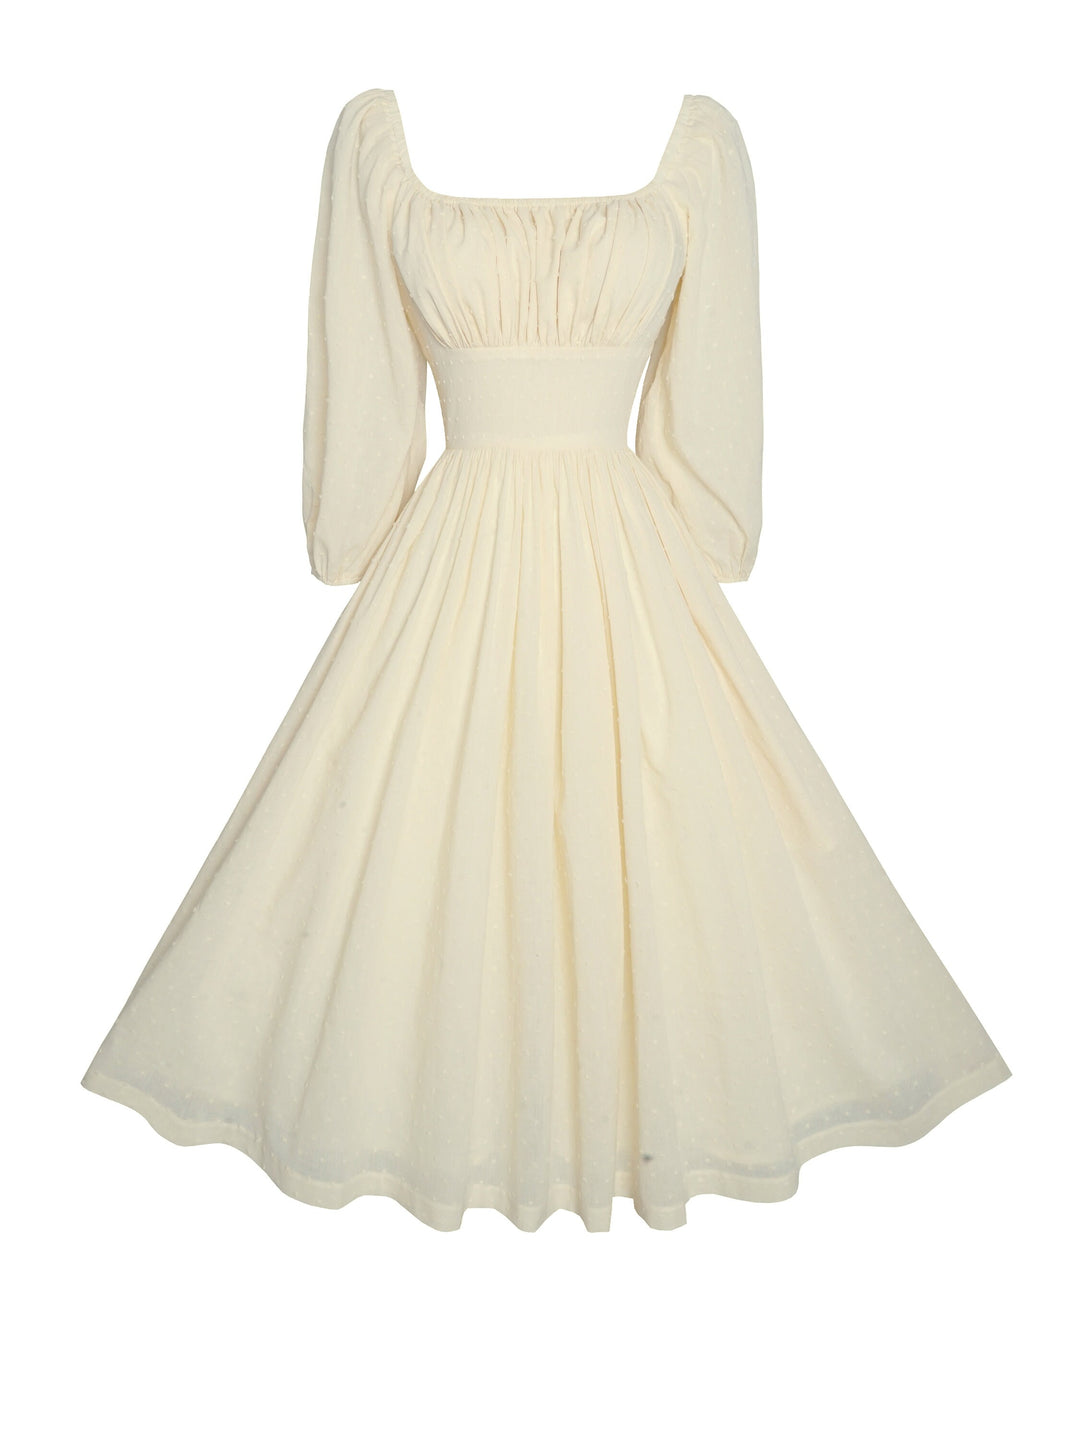 MTO - Sydney Dress Ivory "Dotted Swiss"